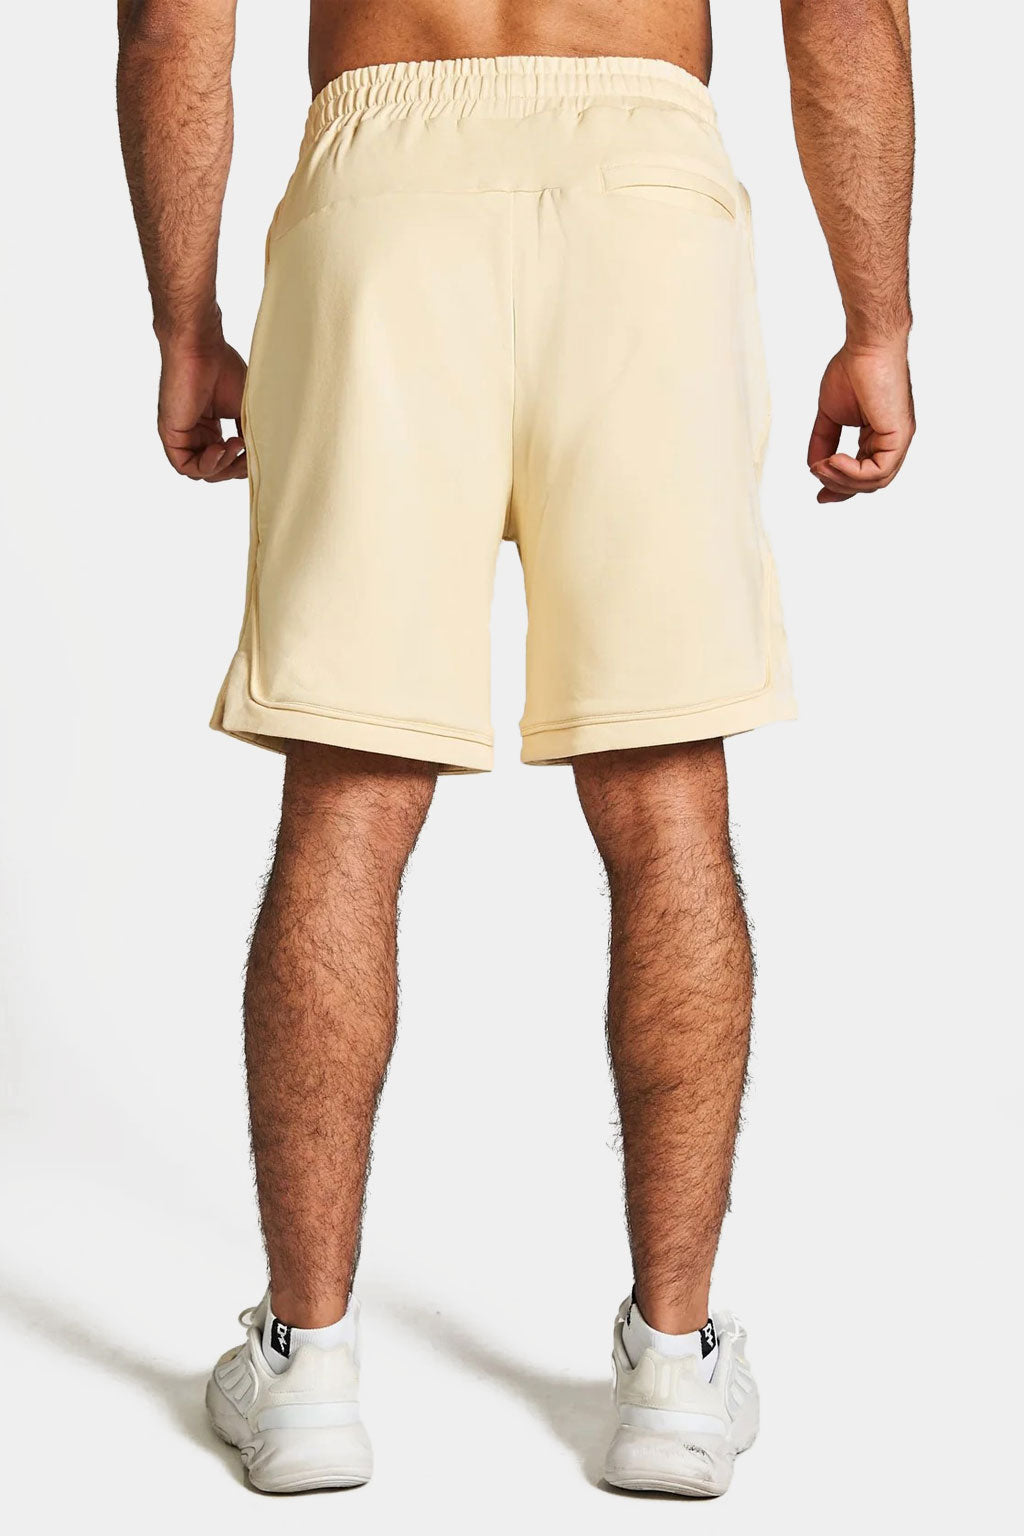 Rzist - Never Settle Men's Casual Shorts